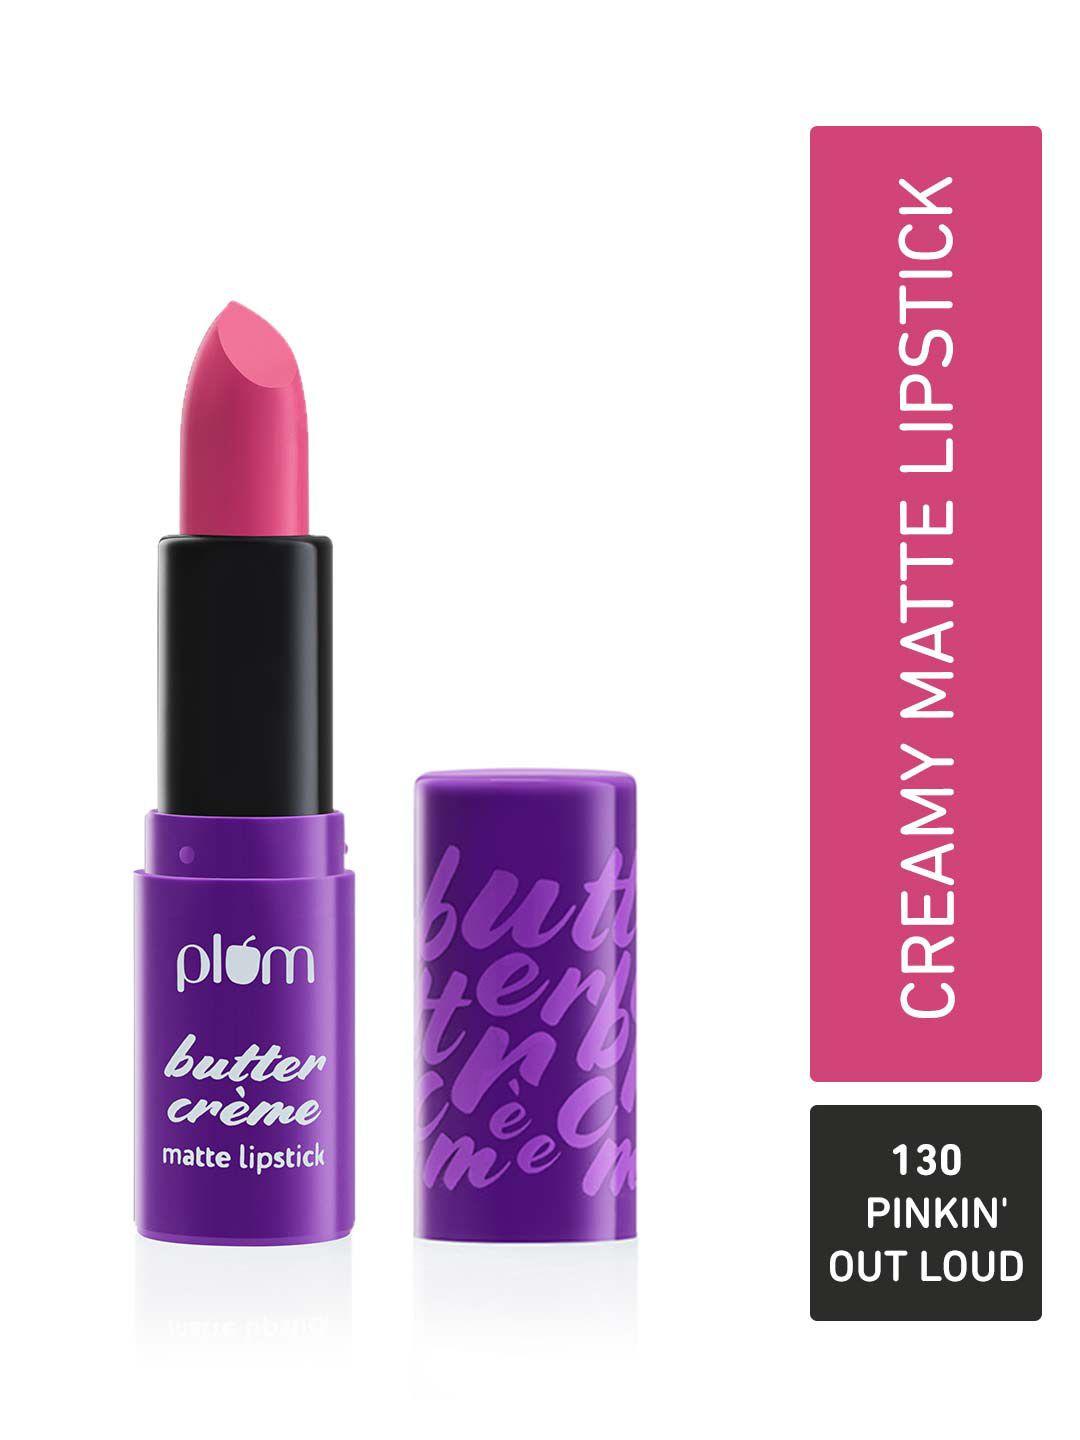 plum butter creme highly pigmented lightweight matte lipstick - pinkin' out loud 130